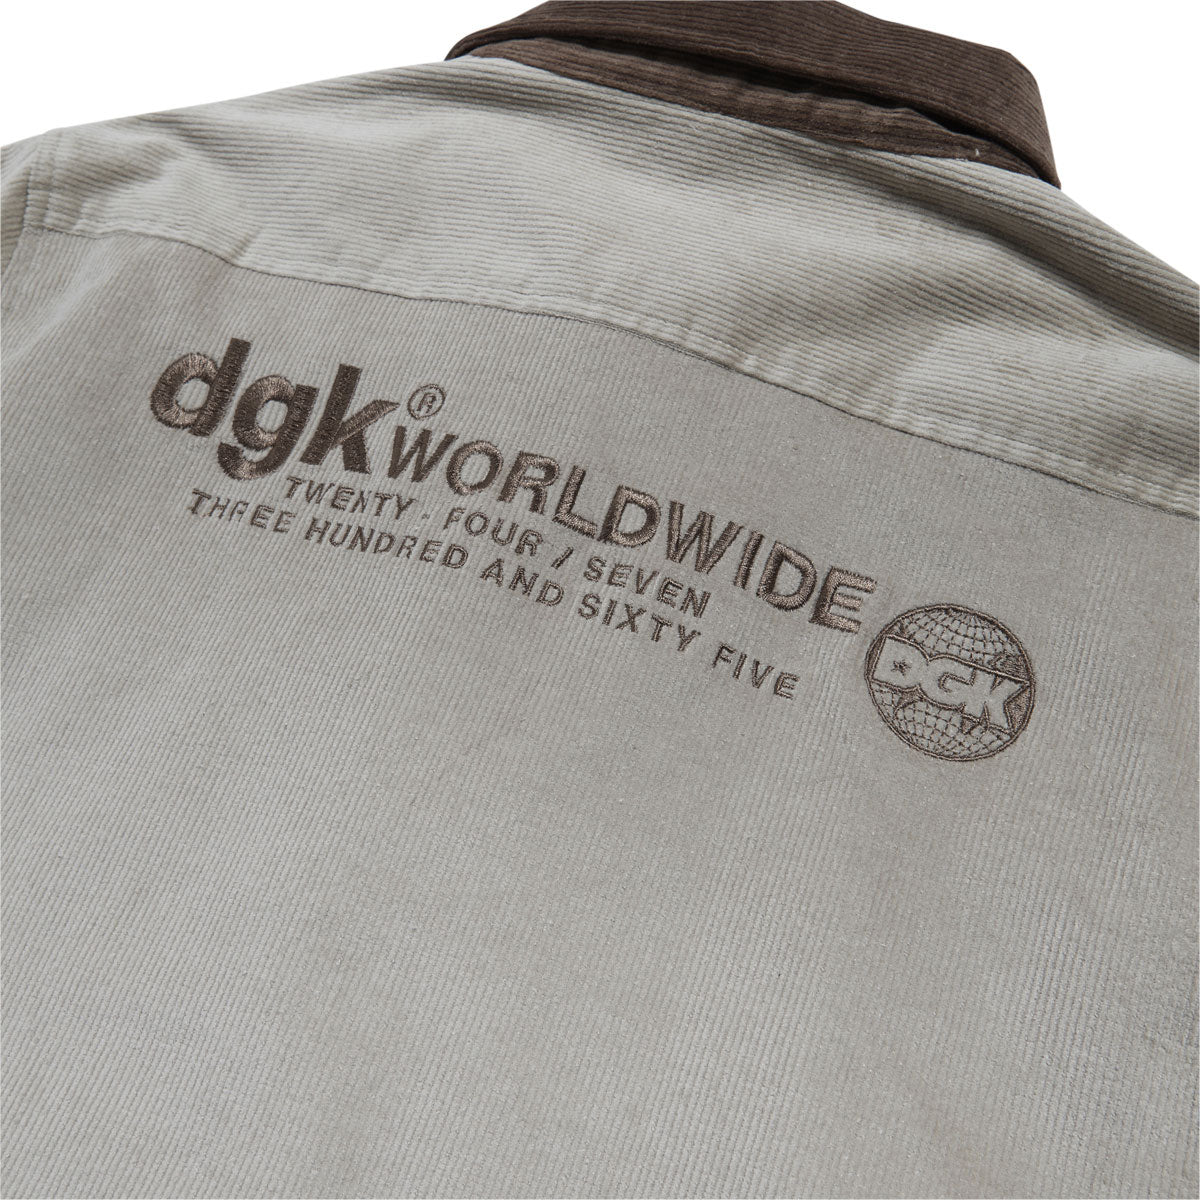 DGK Global Shacket Jacket - Tan image 4